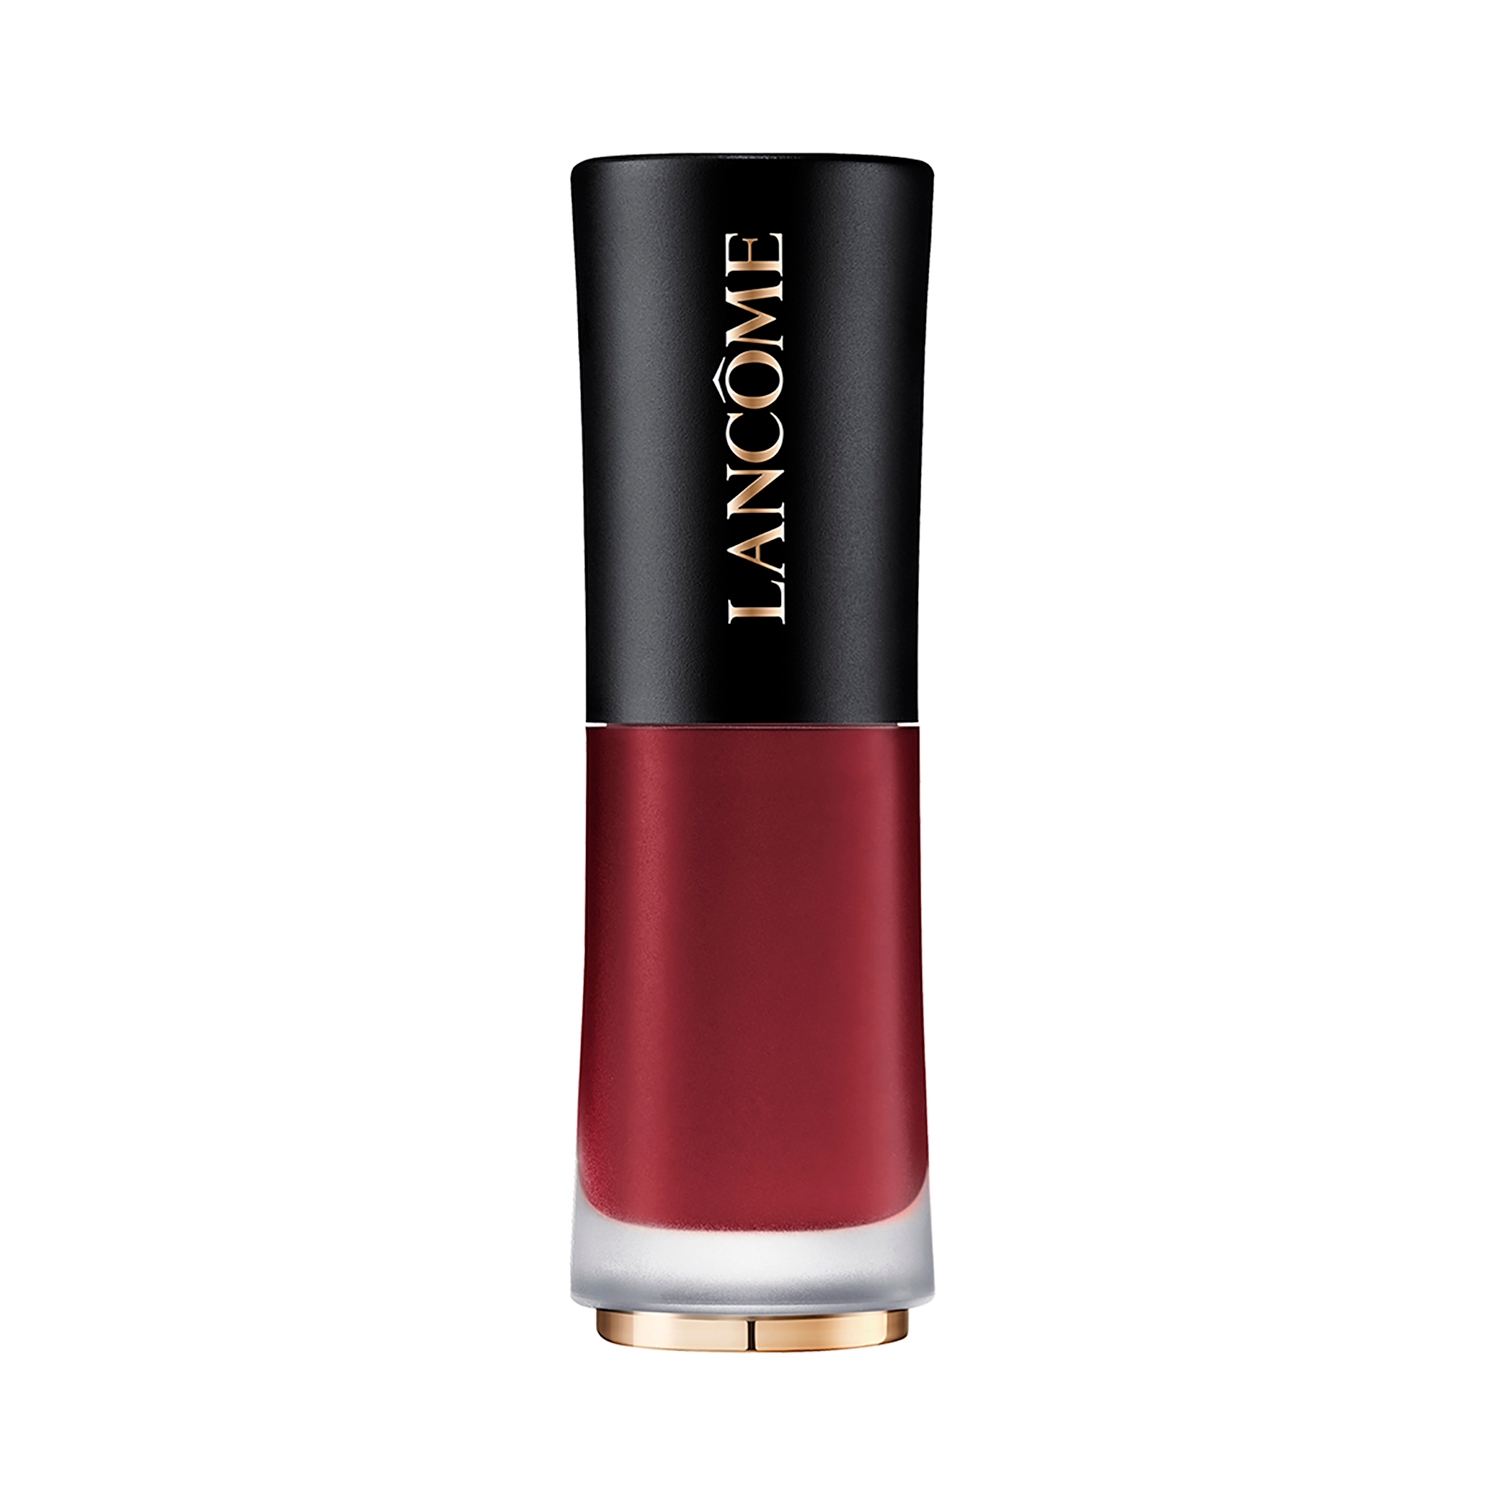 Lancome | Lancome L'Absolu Rouge Drama Ink Semi-Matte Liquid Lipstick - 481 Nuit Pourpre (6ml)